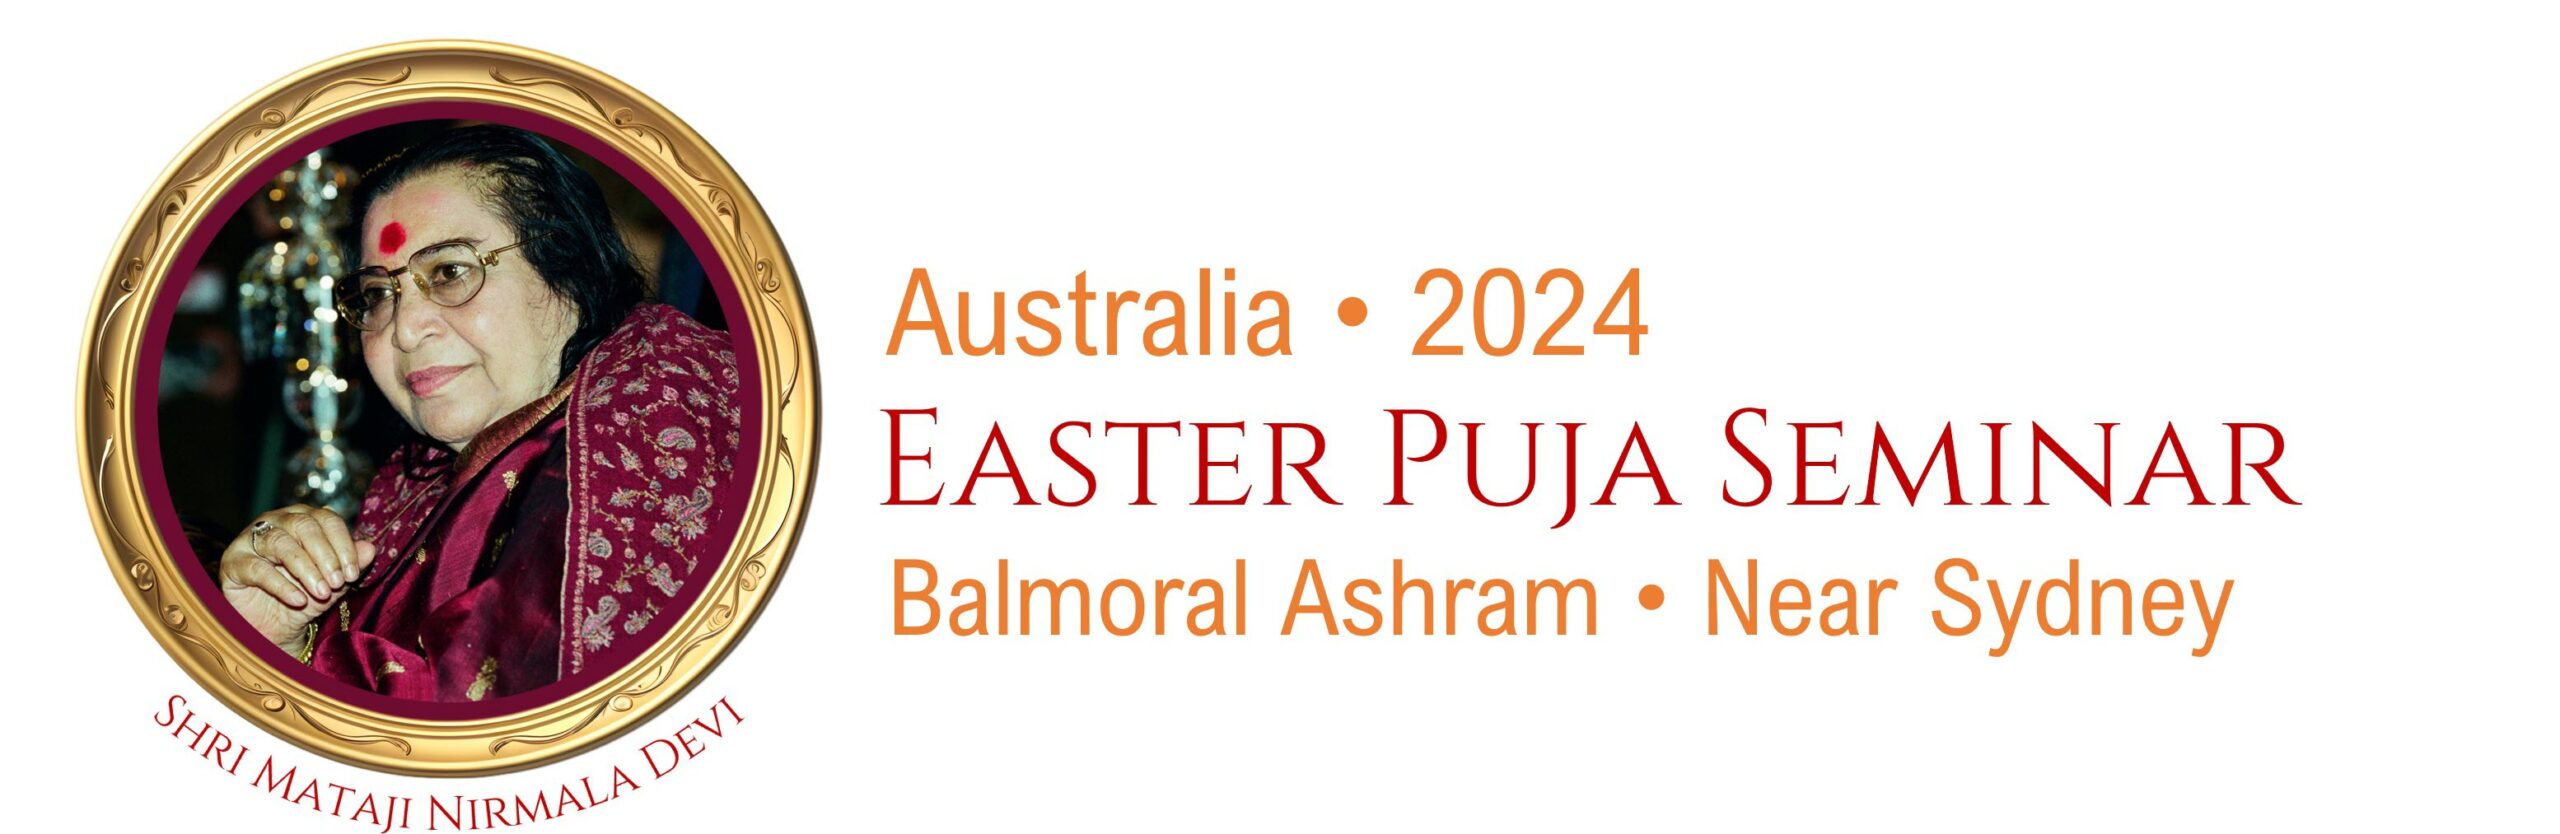 Australian Easter Puja 2024